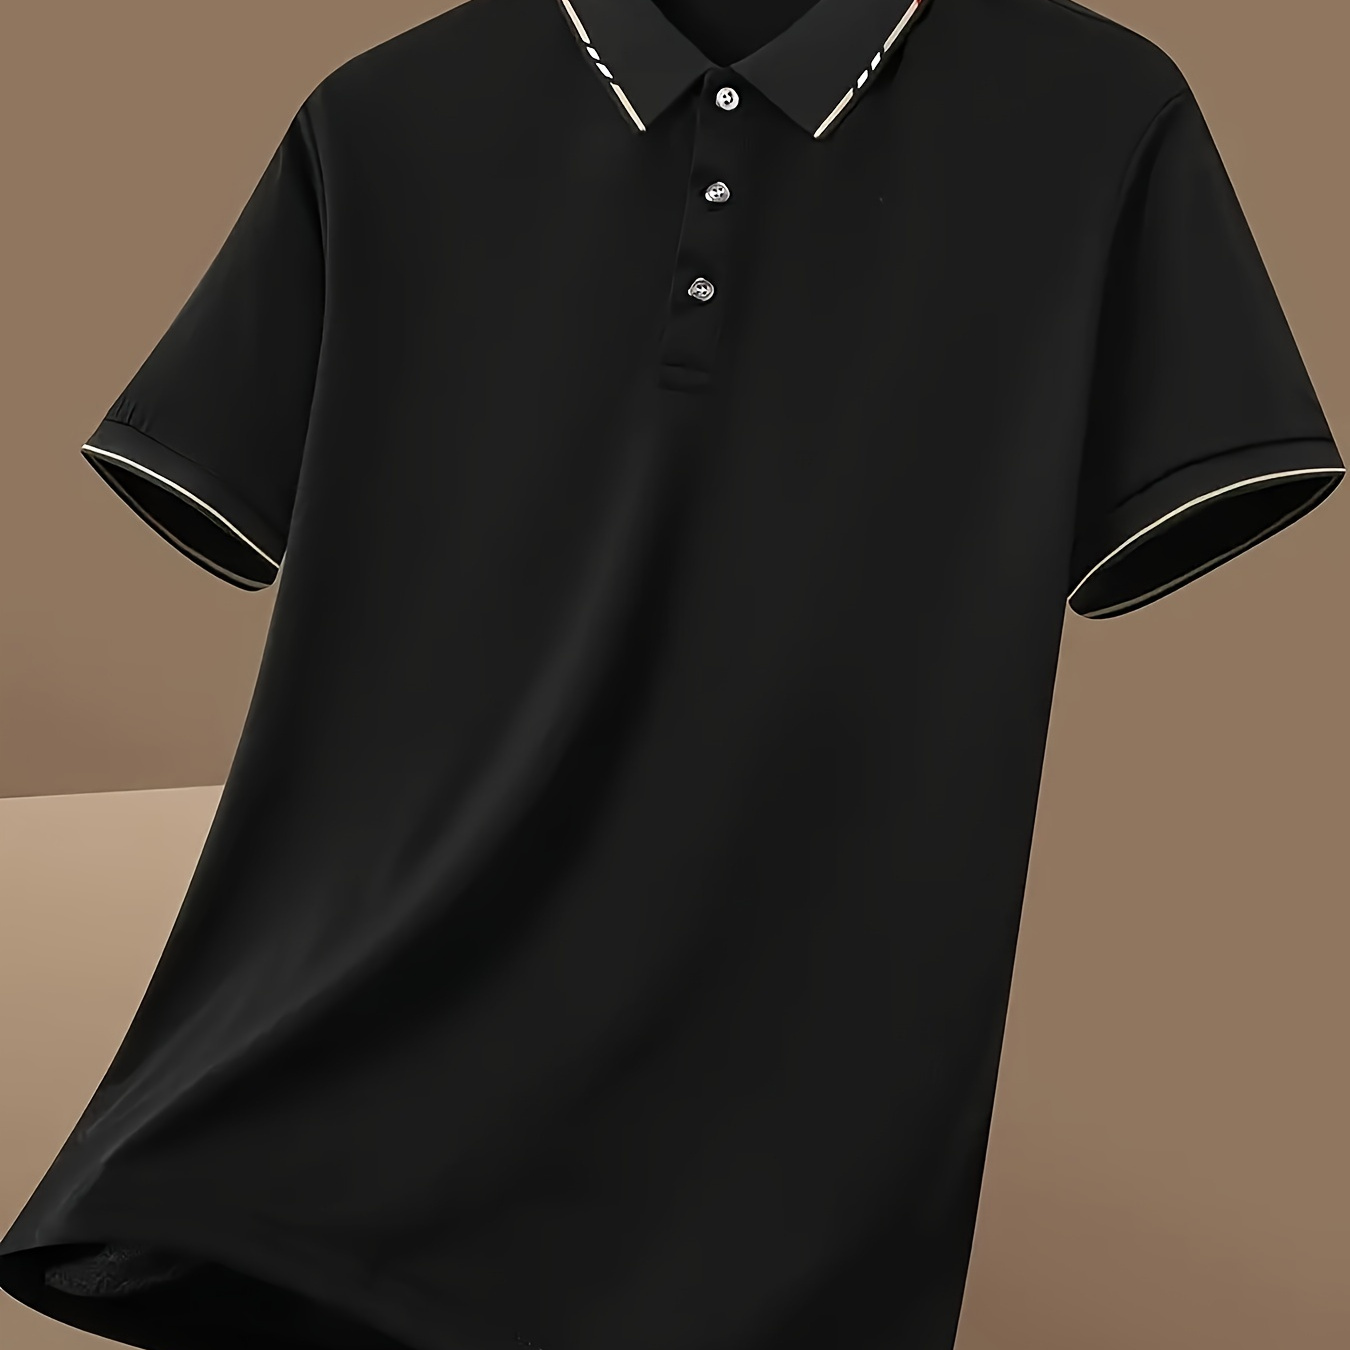 

Men's Solid Quick-drying Short Sleeve Lapel Golf Shirts, Casual Style Slight Stretch Regular Fit Summer Tops, Summer Golf Shirts